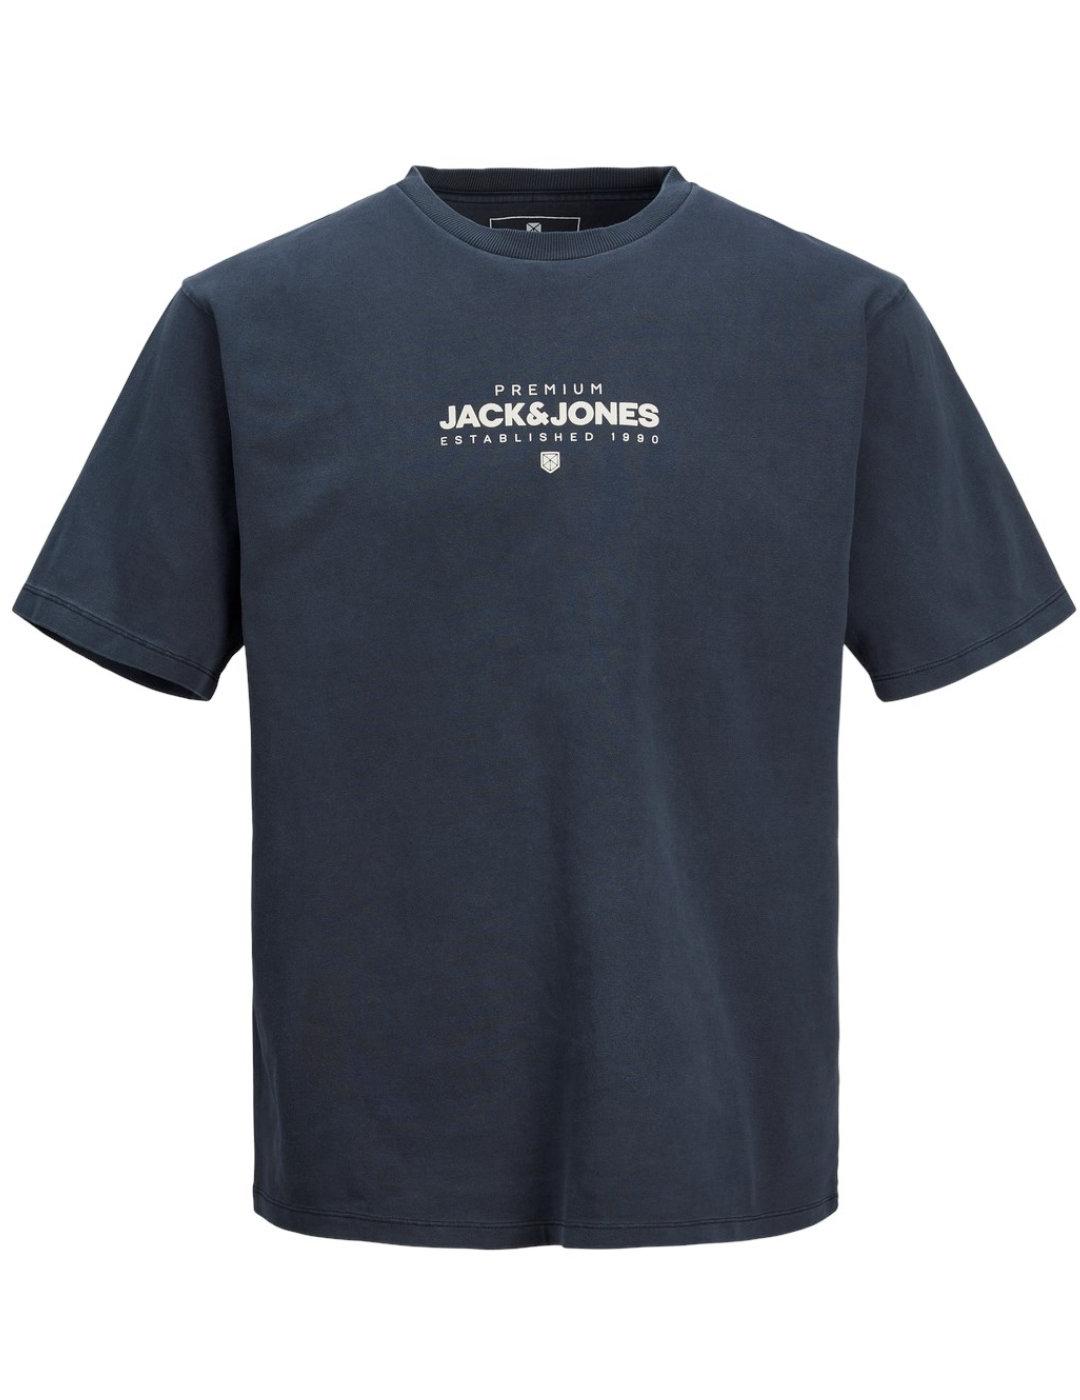 Camiseta Jack&Jones Huxi azul marino manga corta para hombre